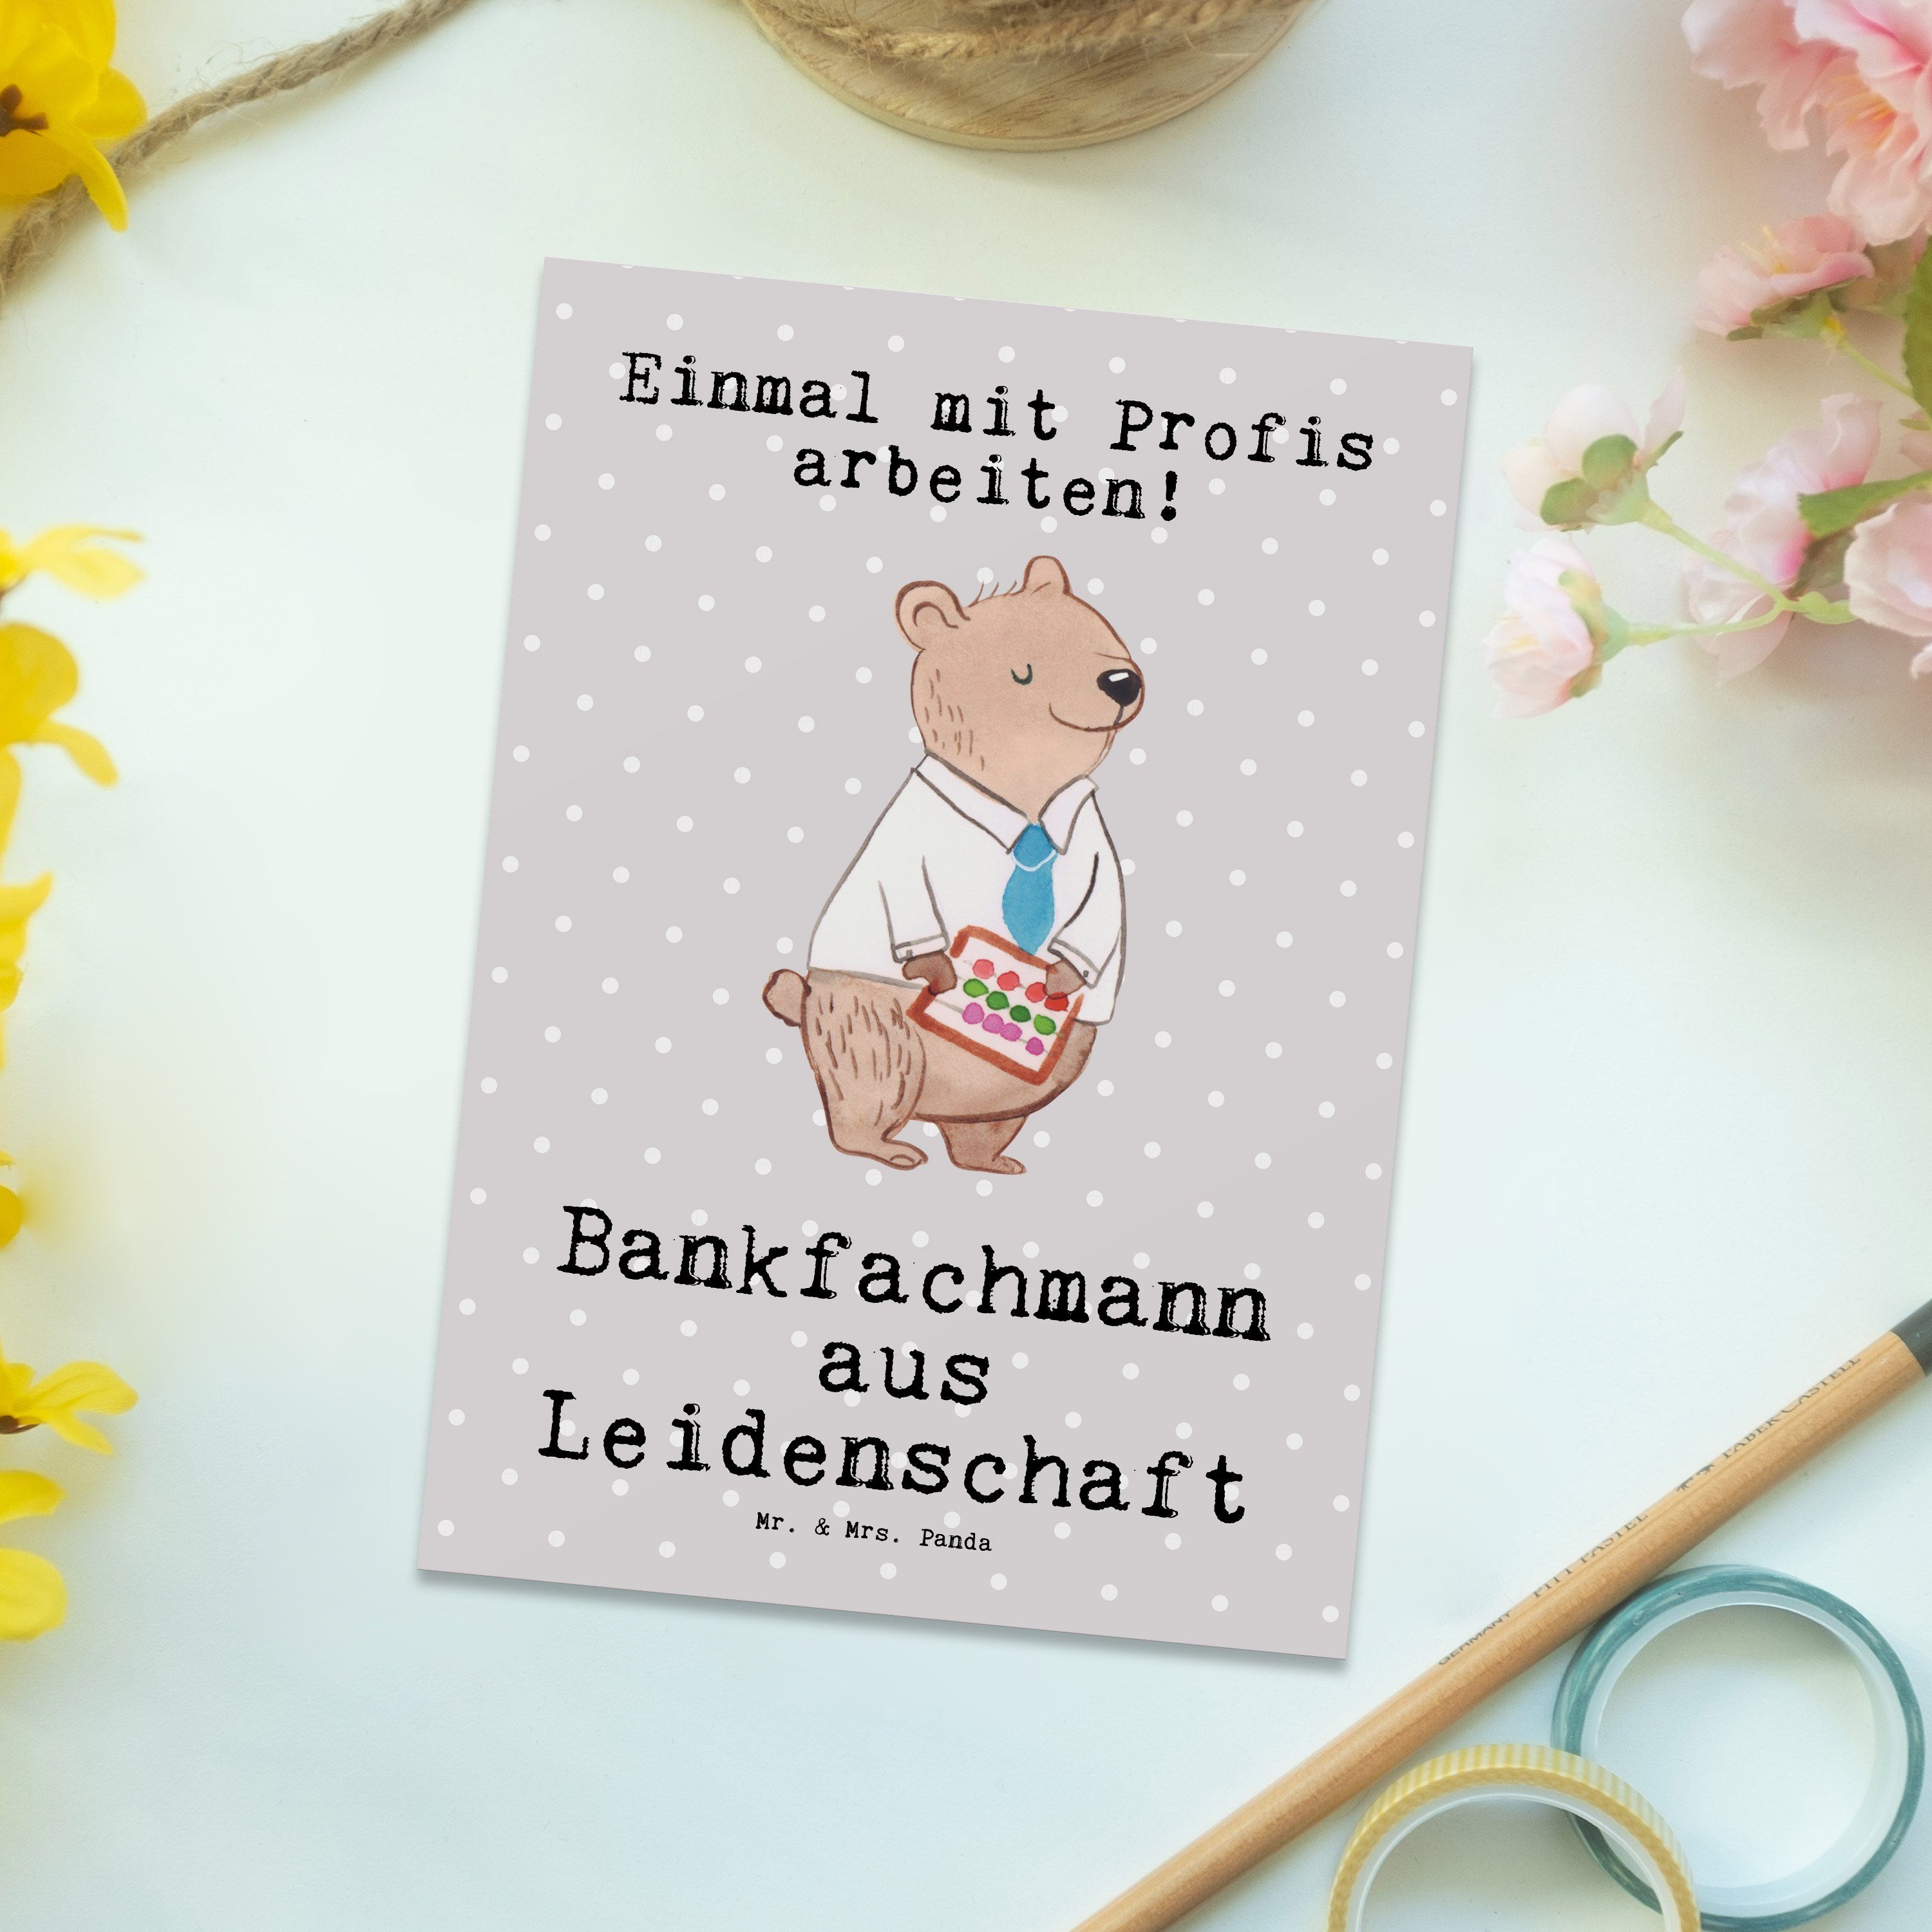 Mr. & - Grau Panda Geschenk, - Bankangestel Bankfachmann Leidenschaft aus Postkarte Pastell Mrs.